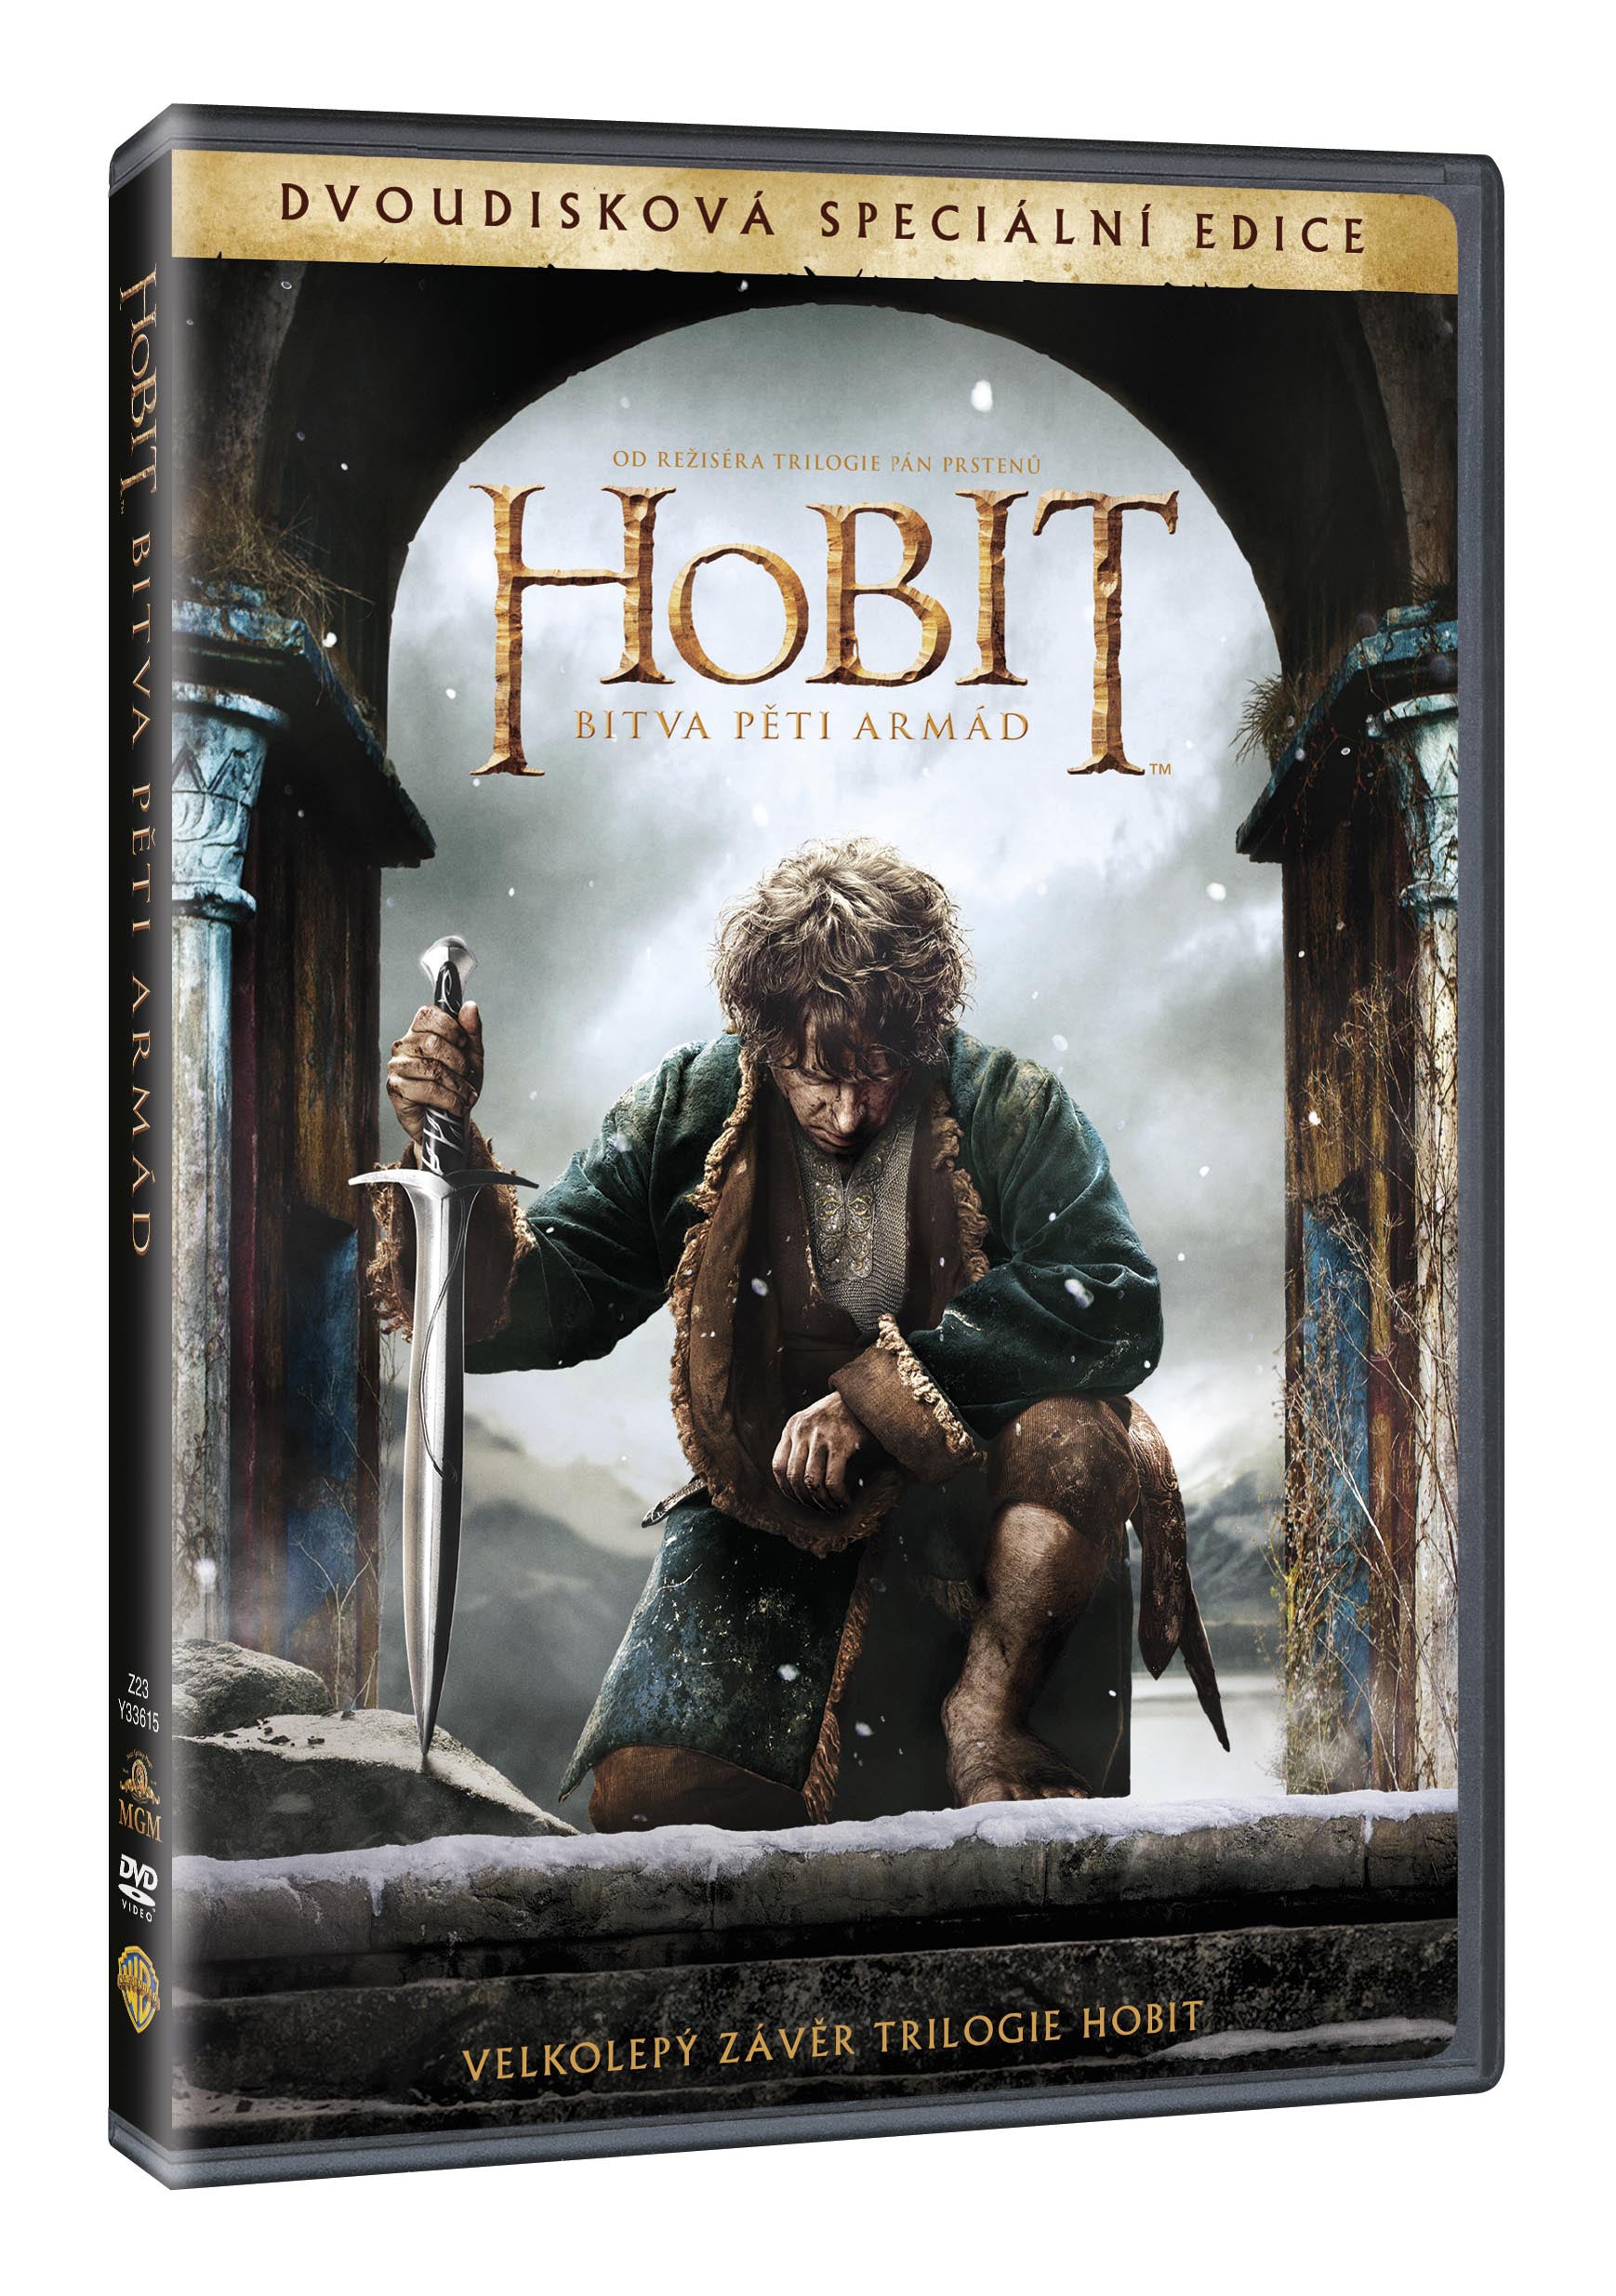 Hobit: Bitva peti armad 2DVD / The Hobbit: The Battle of the Five Armies